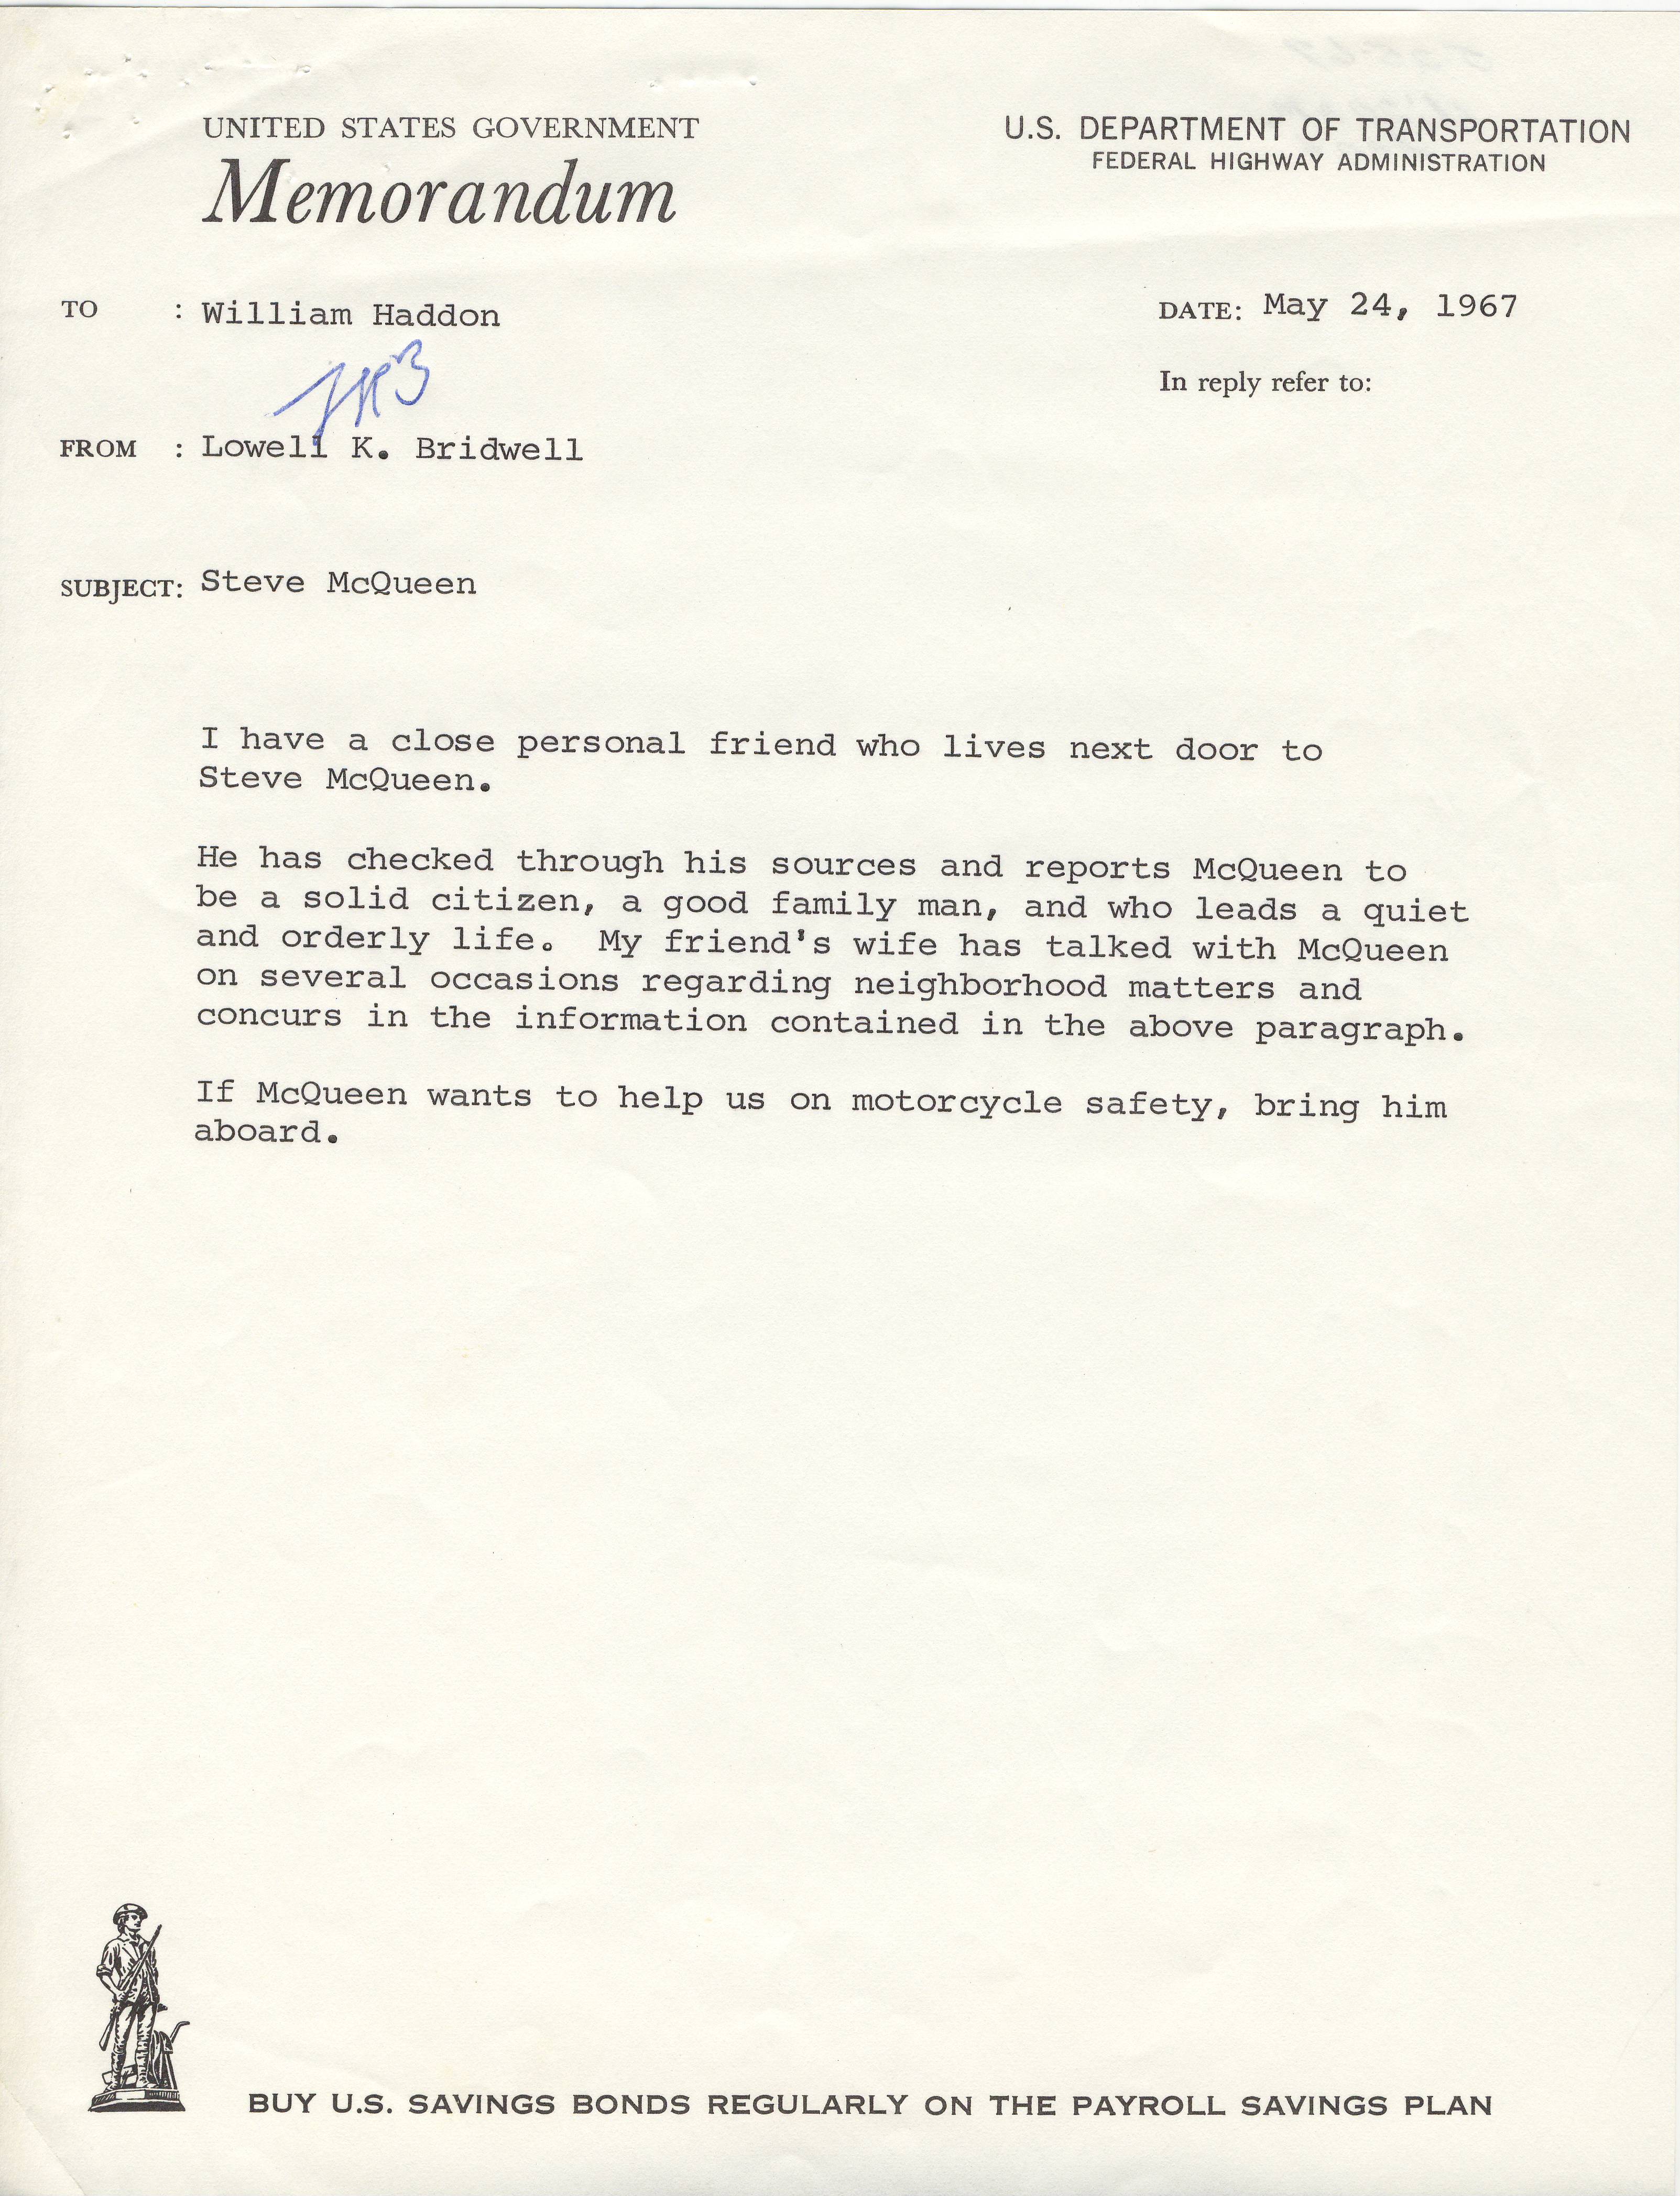 Memorandum from Lowell K. Bridwell to William Haddon, May 24, 1967.